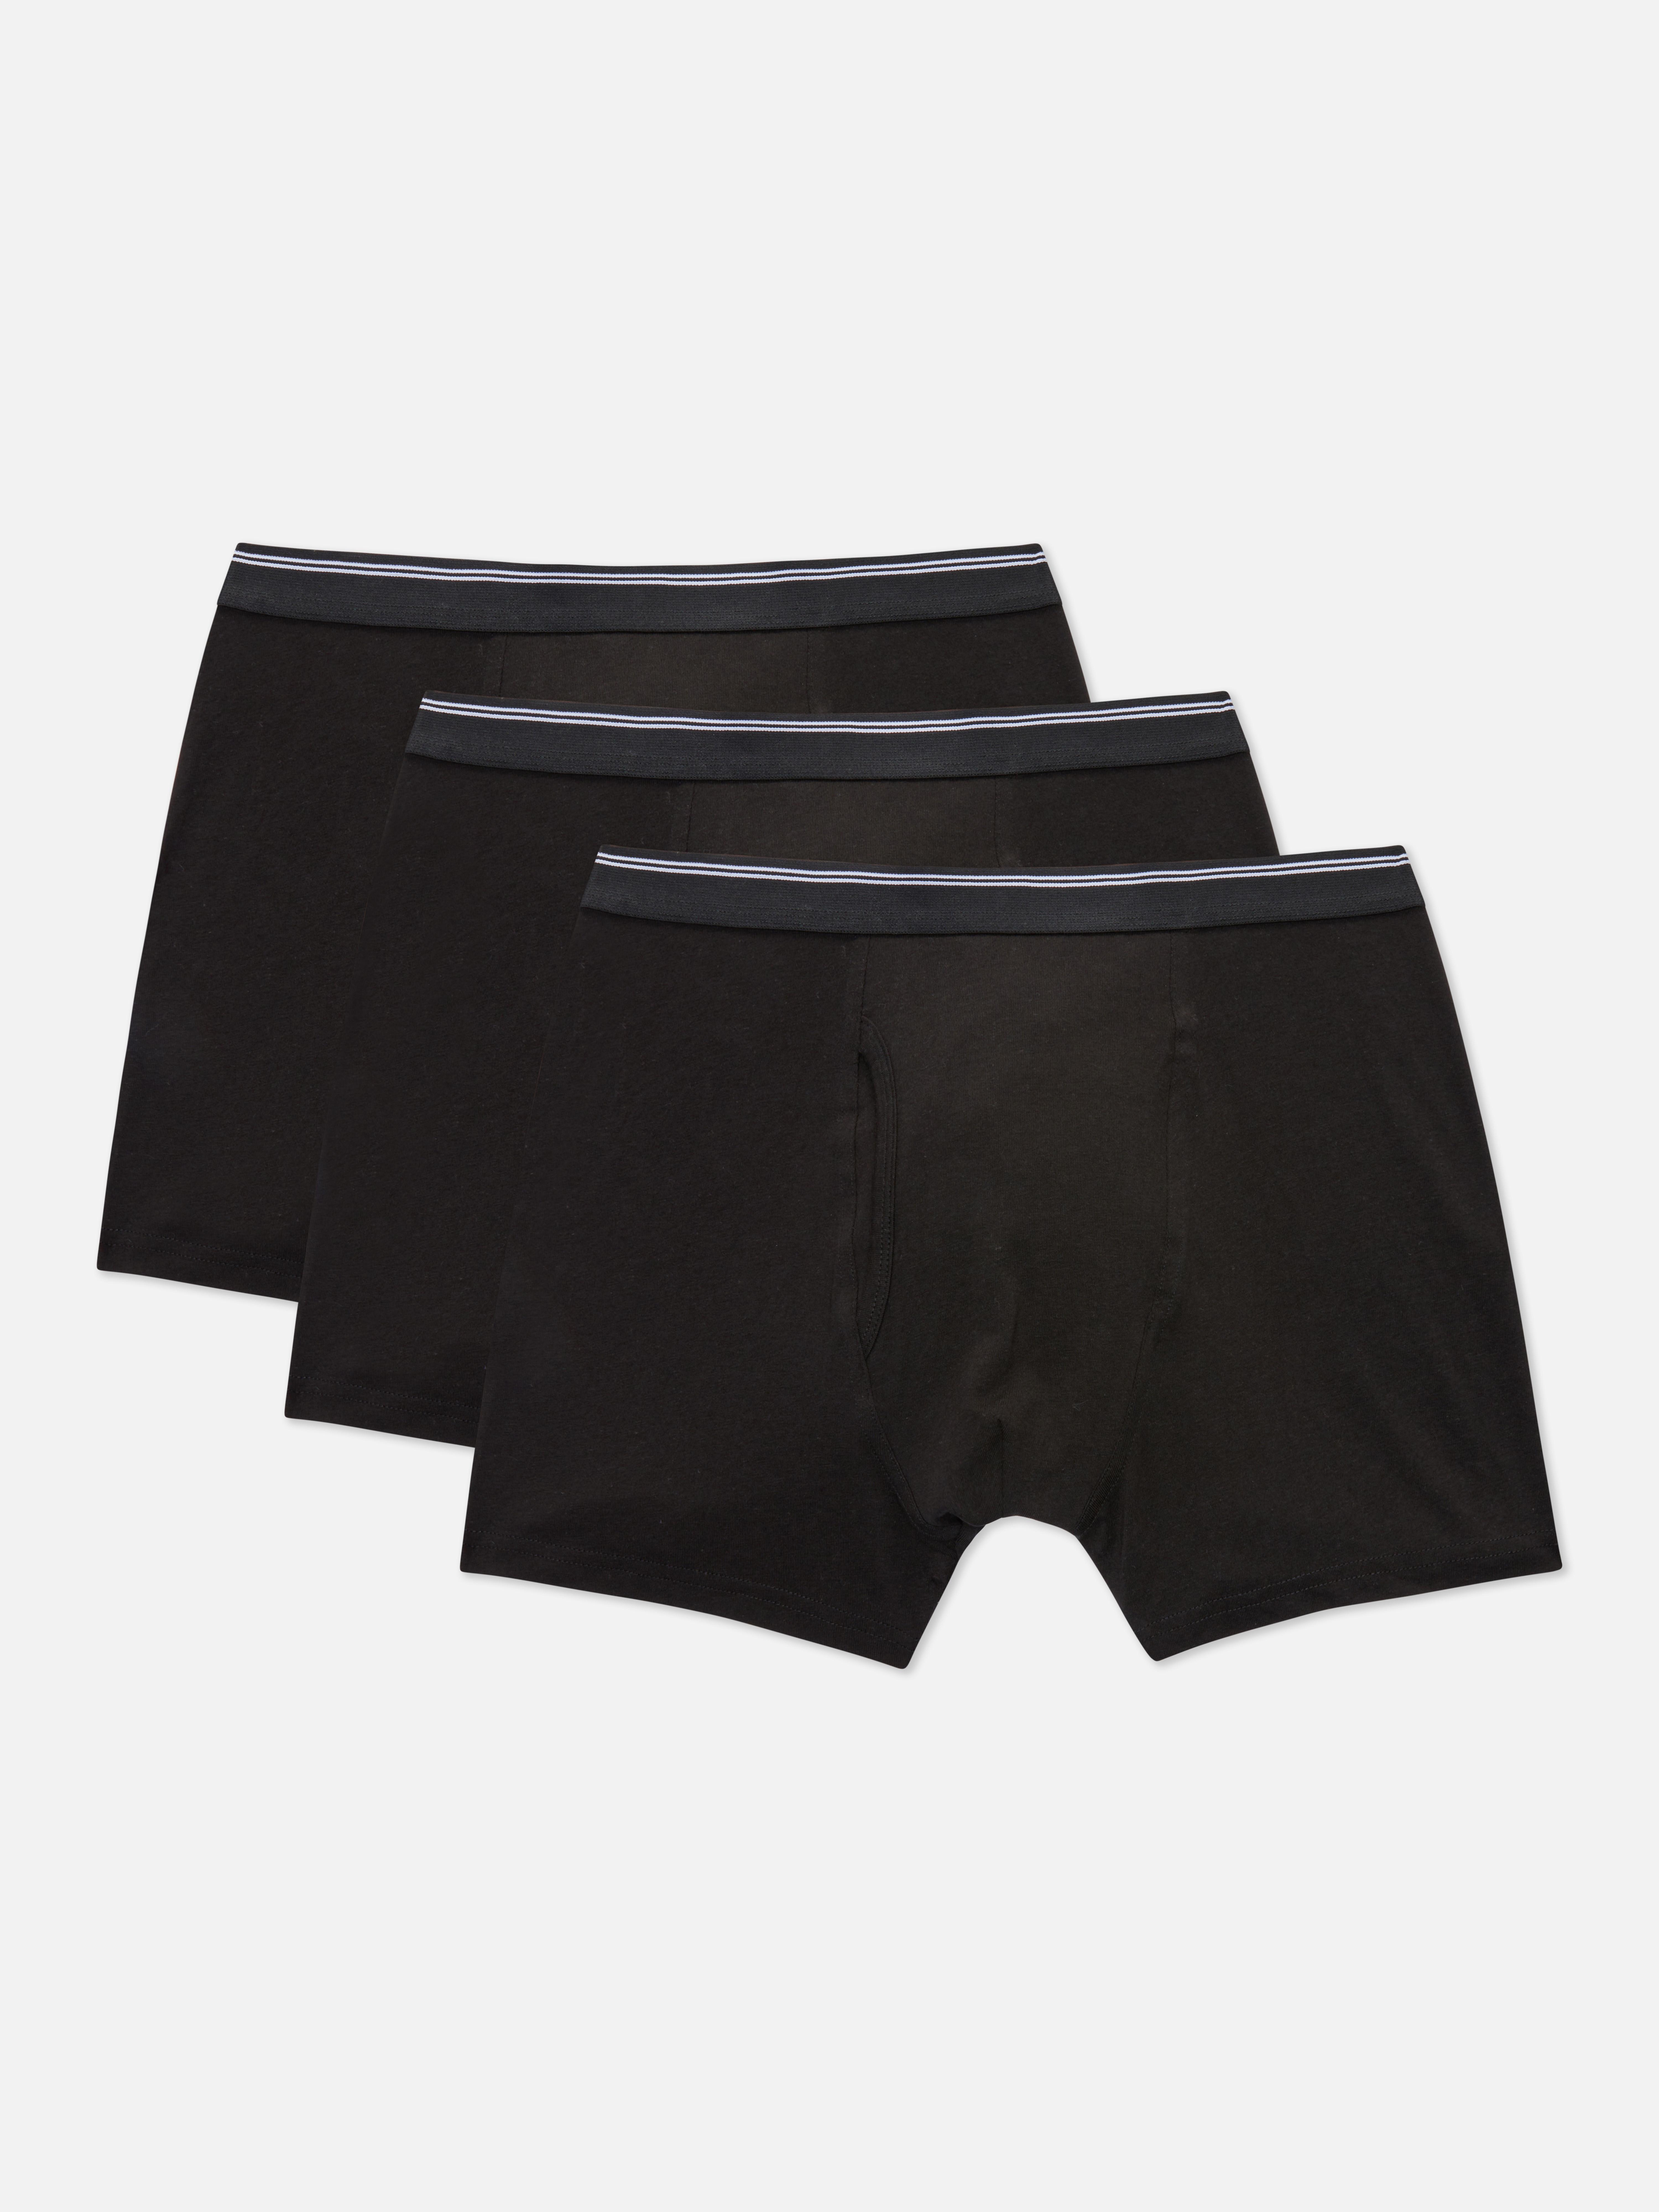 3-Pack Boxer Briefs | Men's Underwear & Boxers | Men's Underwear | Men ...